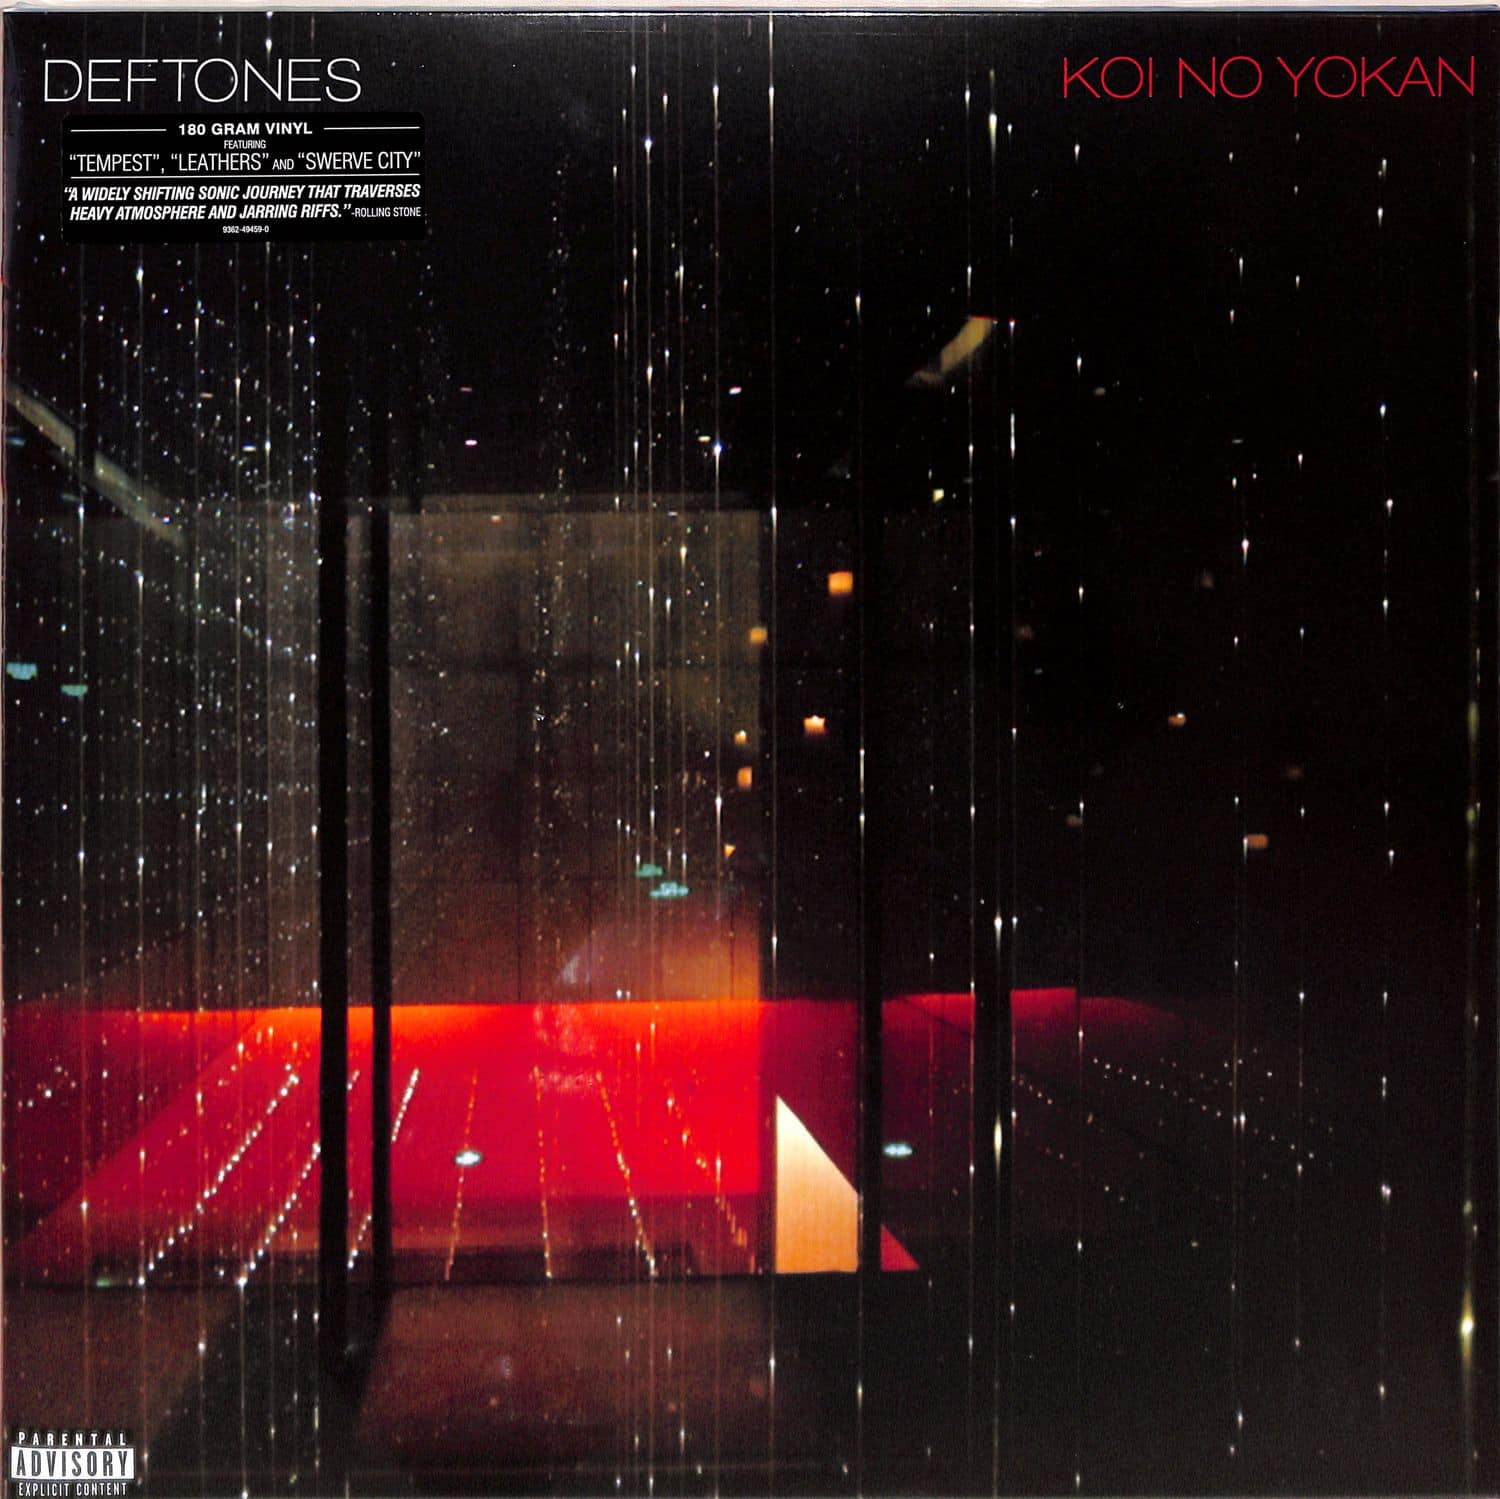 Deftones - KOI NO YOKAN 